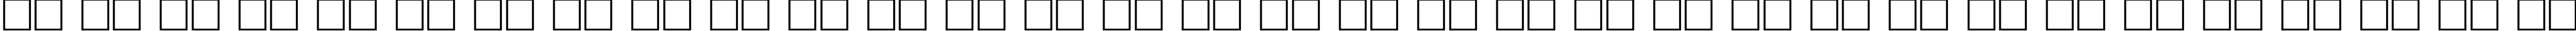 Пример написания русского алфавита шрифтом Aardvark110n